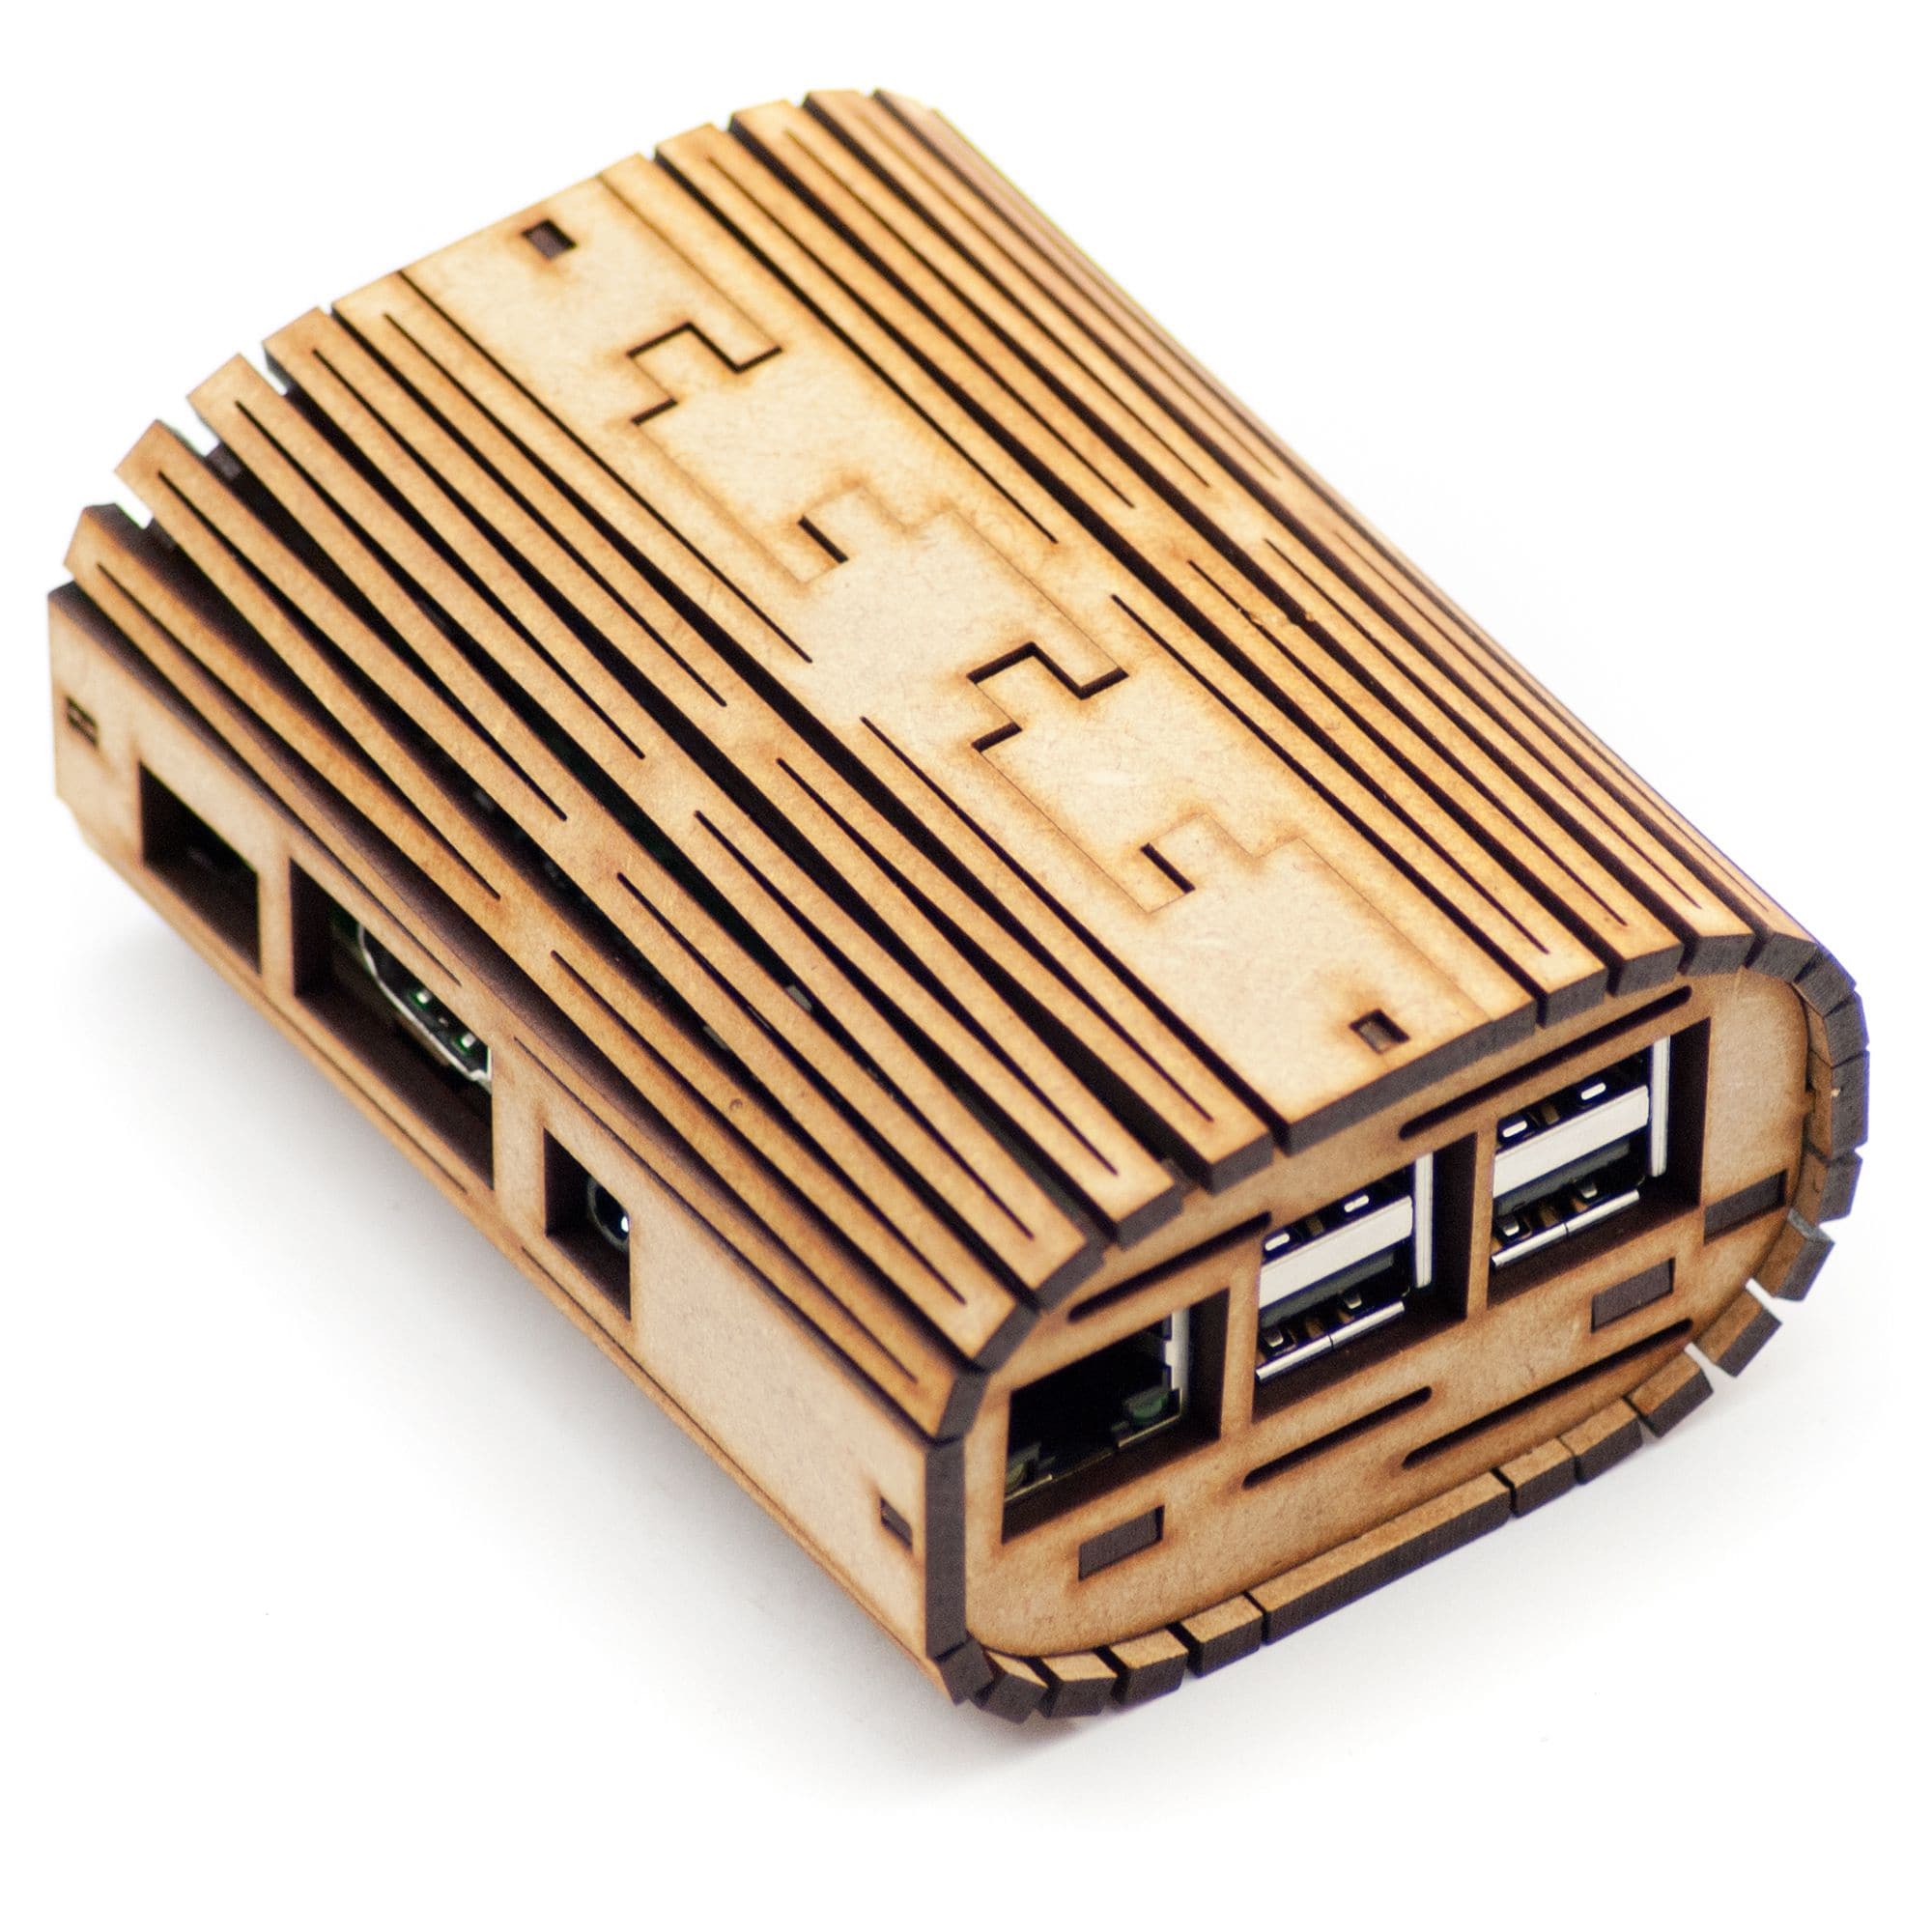 Helix Case for Raspberry Pi 3 - The Pi Hut